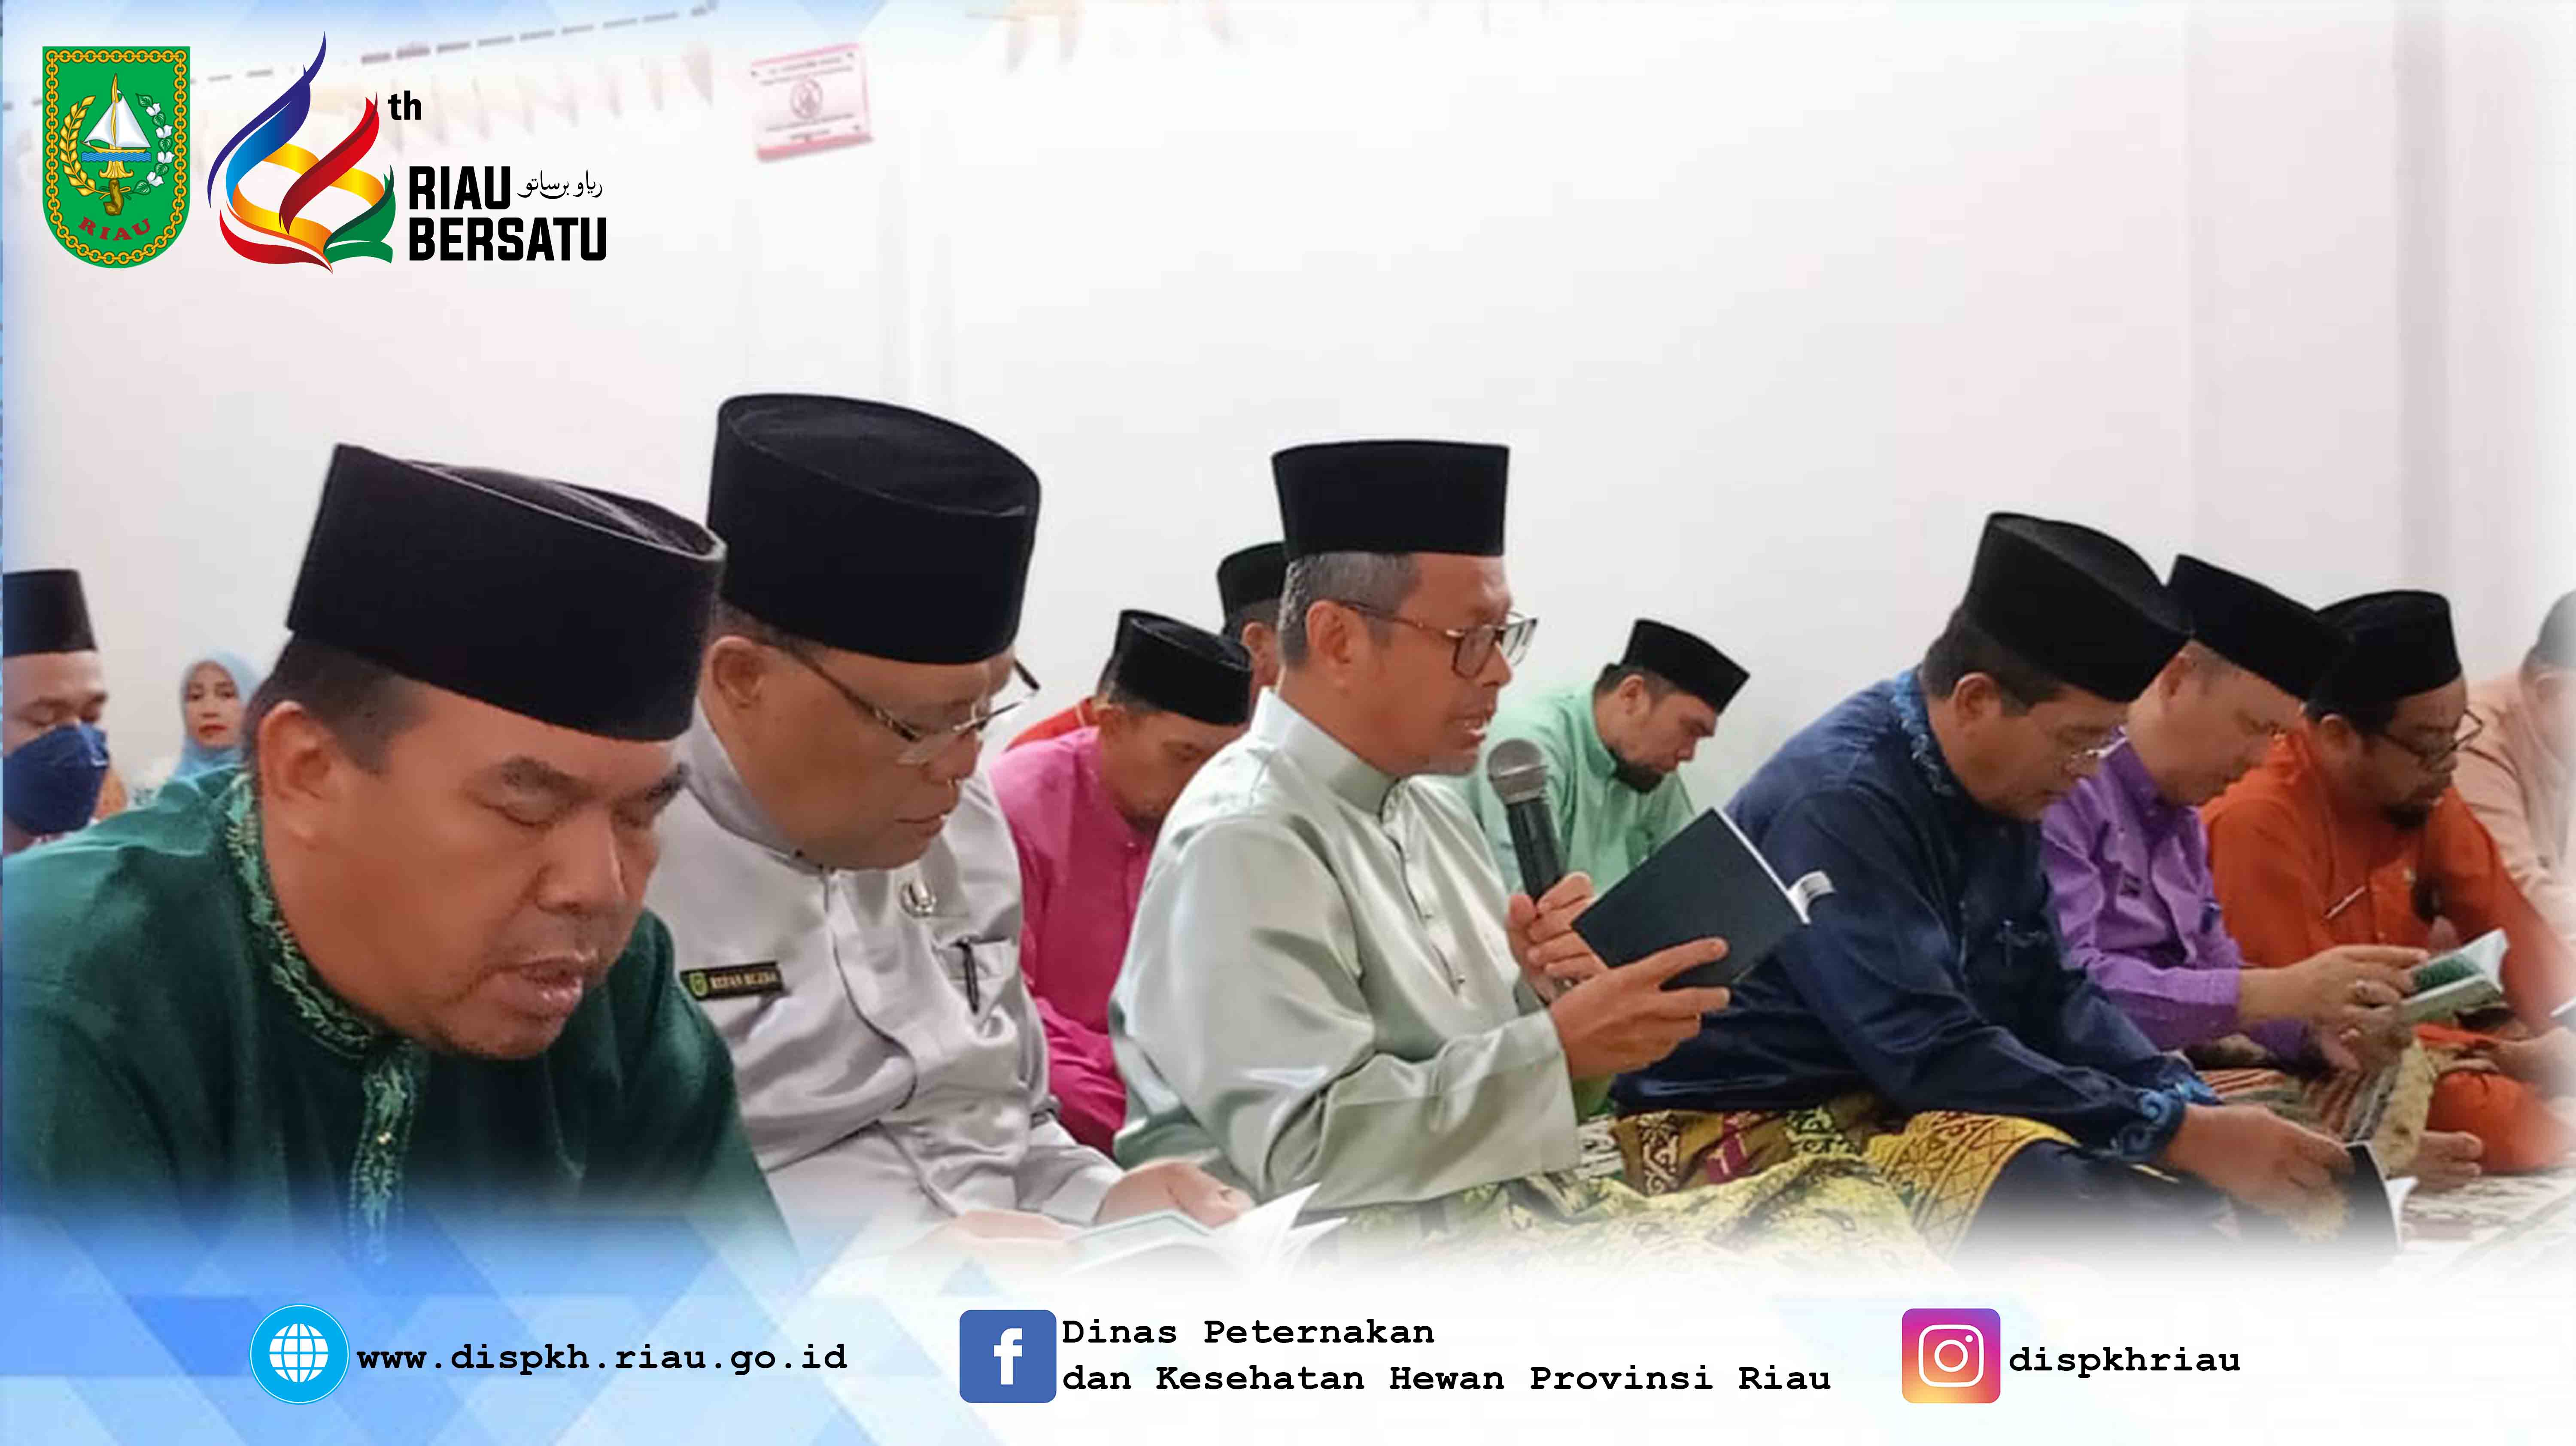 Pelaksanaan Yasinan dan Pengajian di Musholla Dinas Peternakan dan Kesehatan Hewan Provinsi Riau